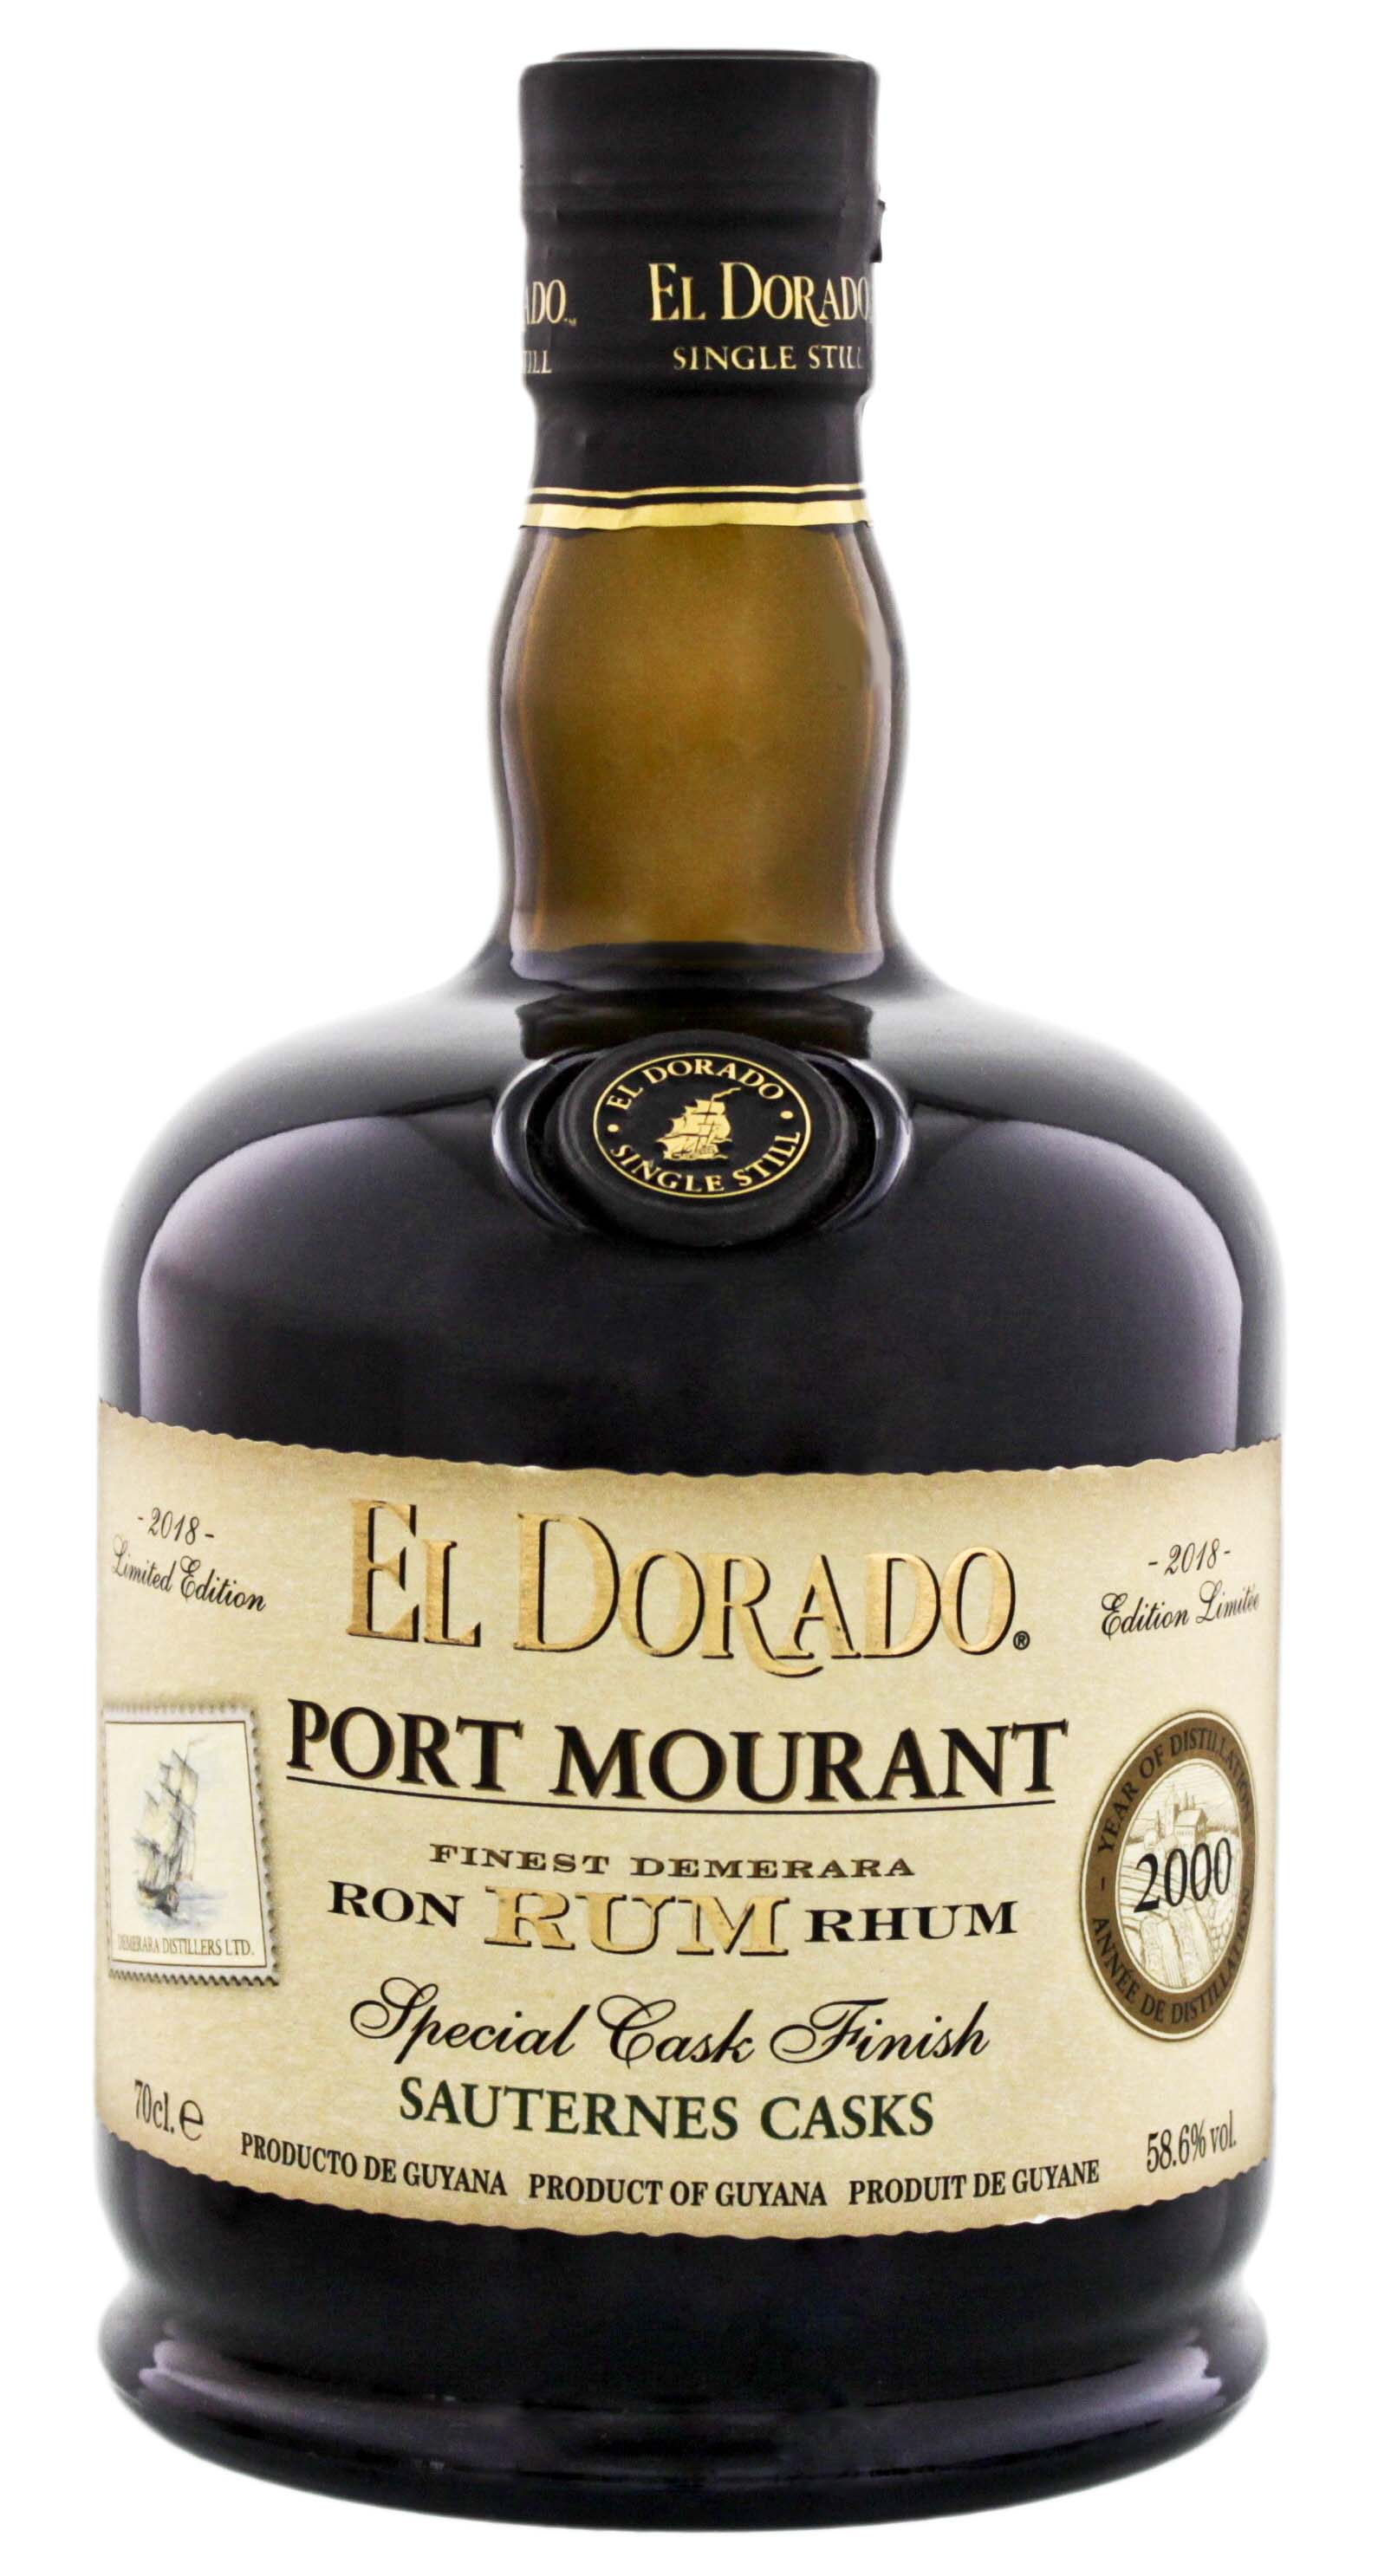 El Dorado Rum Port Mourant Sauternes Special Cask Finish 2000 Limited Edition 2018 0,7L